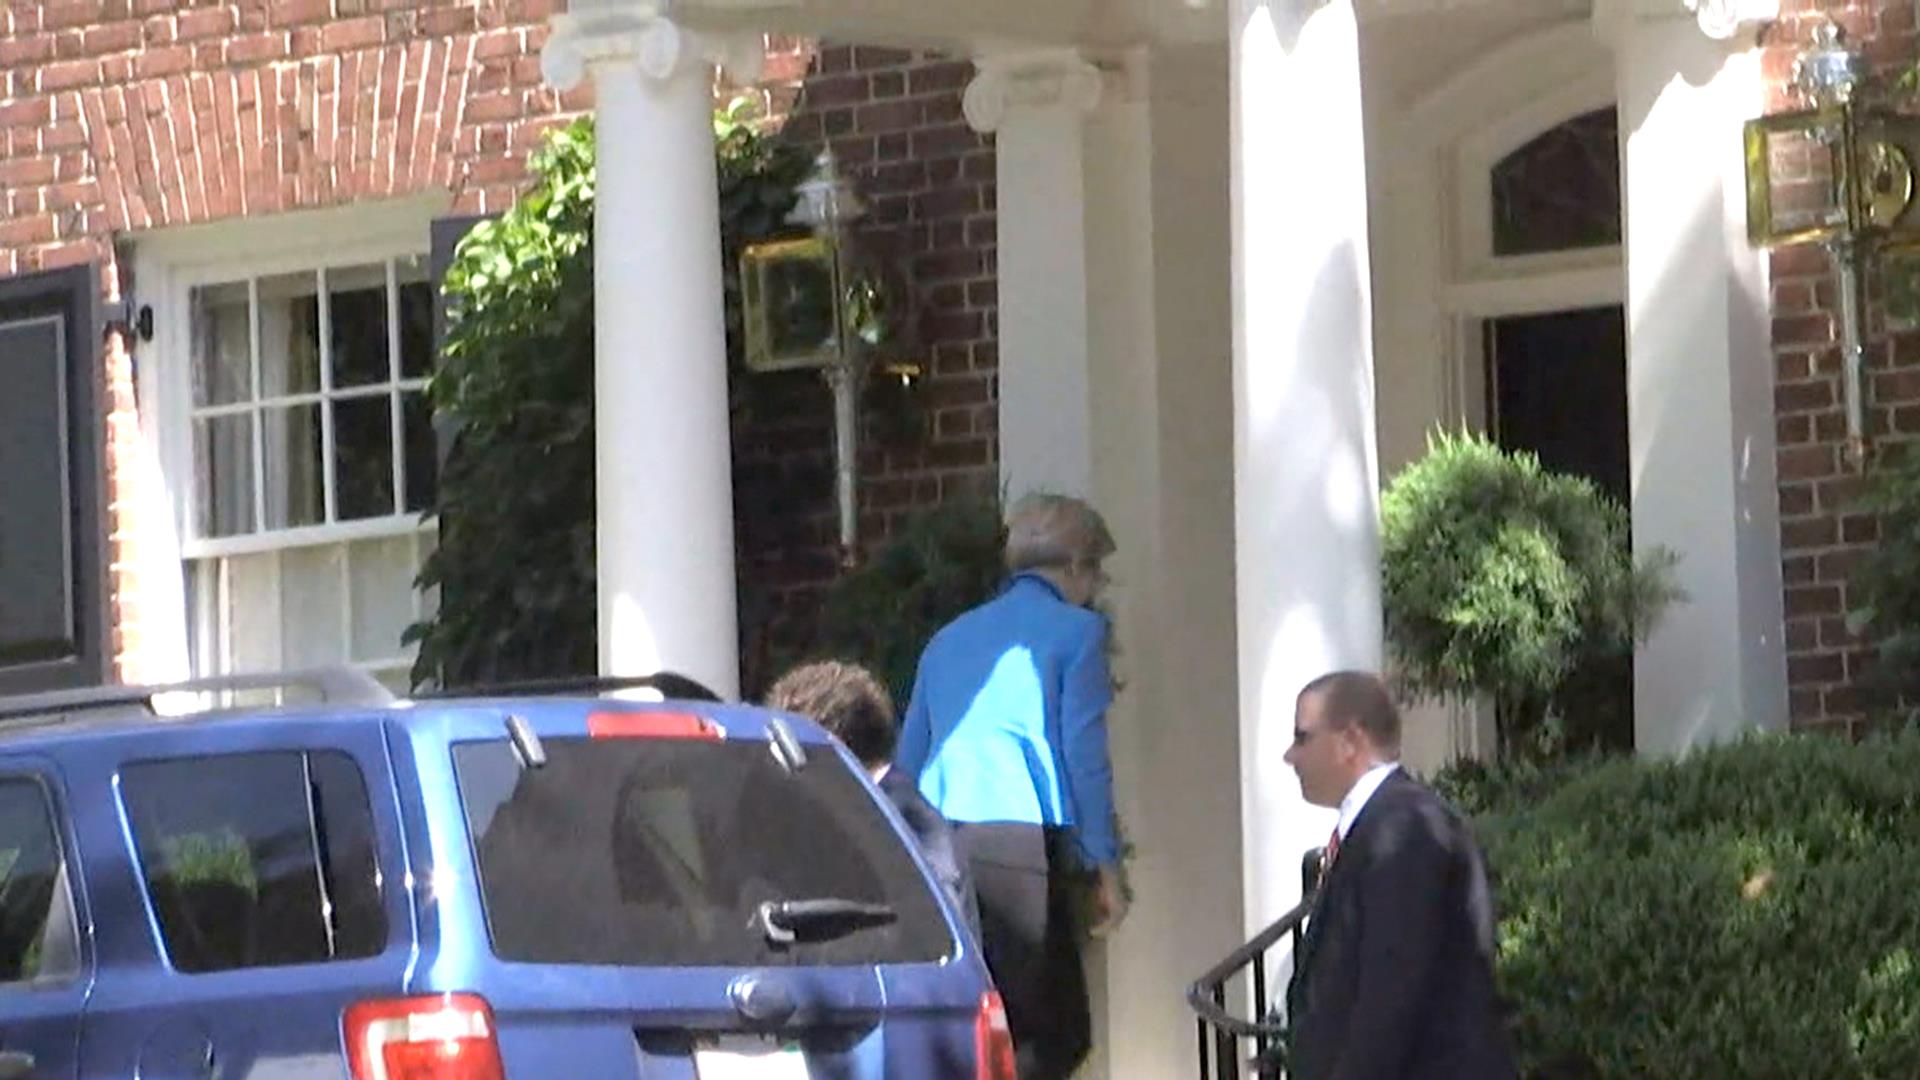 Elizabeth Warren Arrives at Clinton's House for Meeting - NBC News1920 x 1080